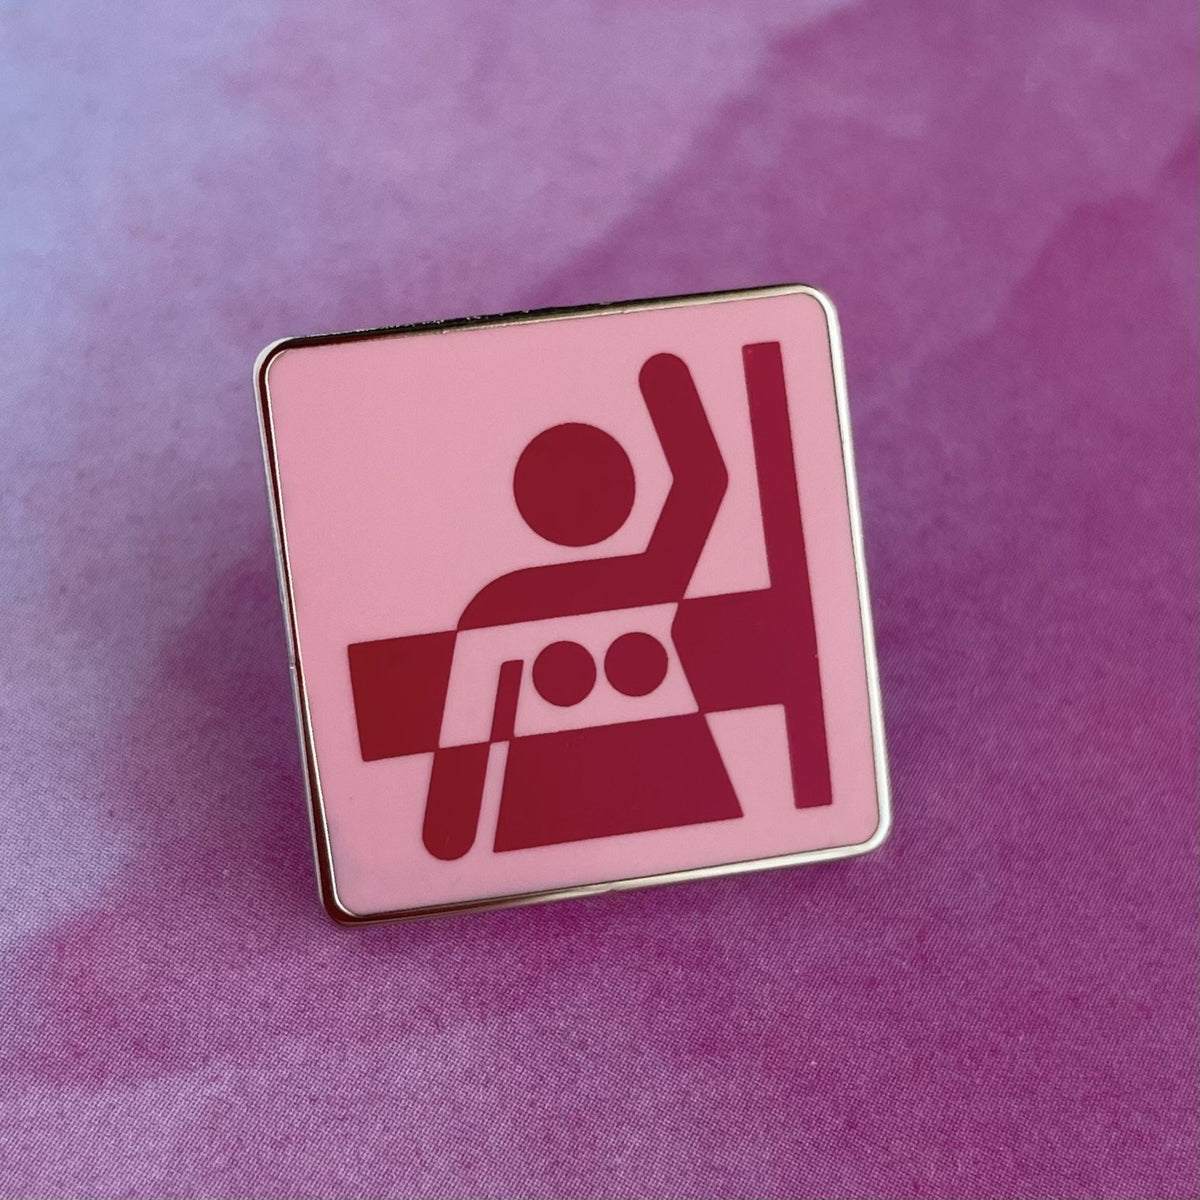 Mammography Pin Pack - Rad Girl Creations